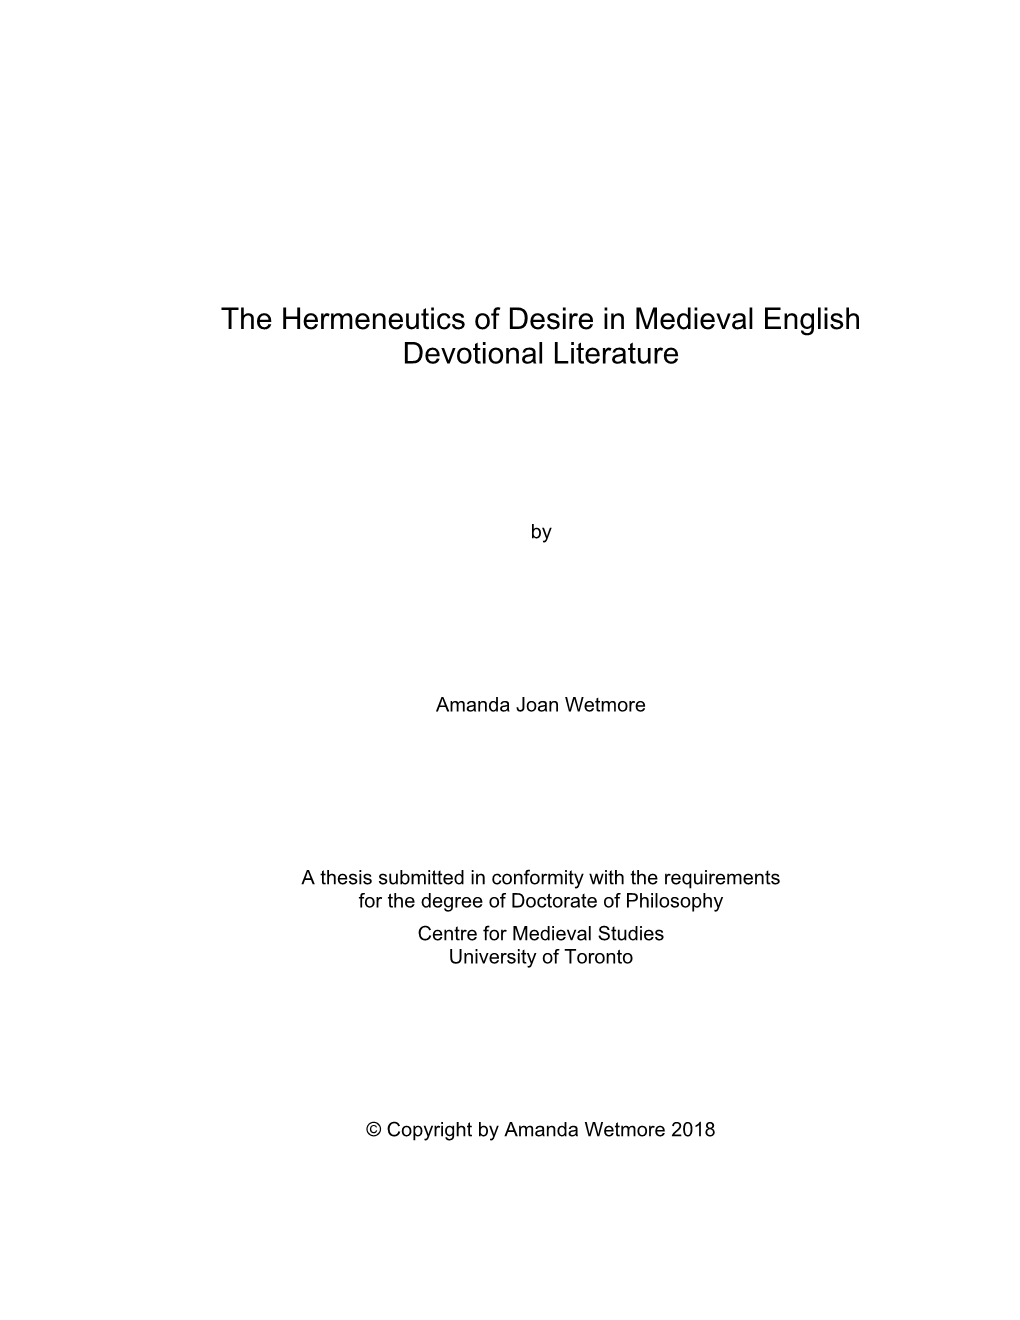 The Hermeneutics of Desire in Medieval English Devotional Literature